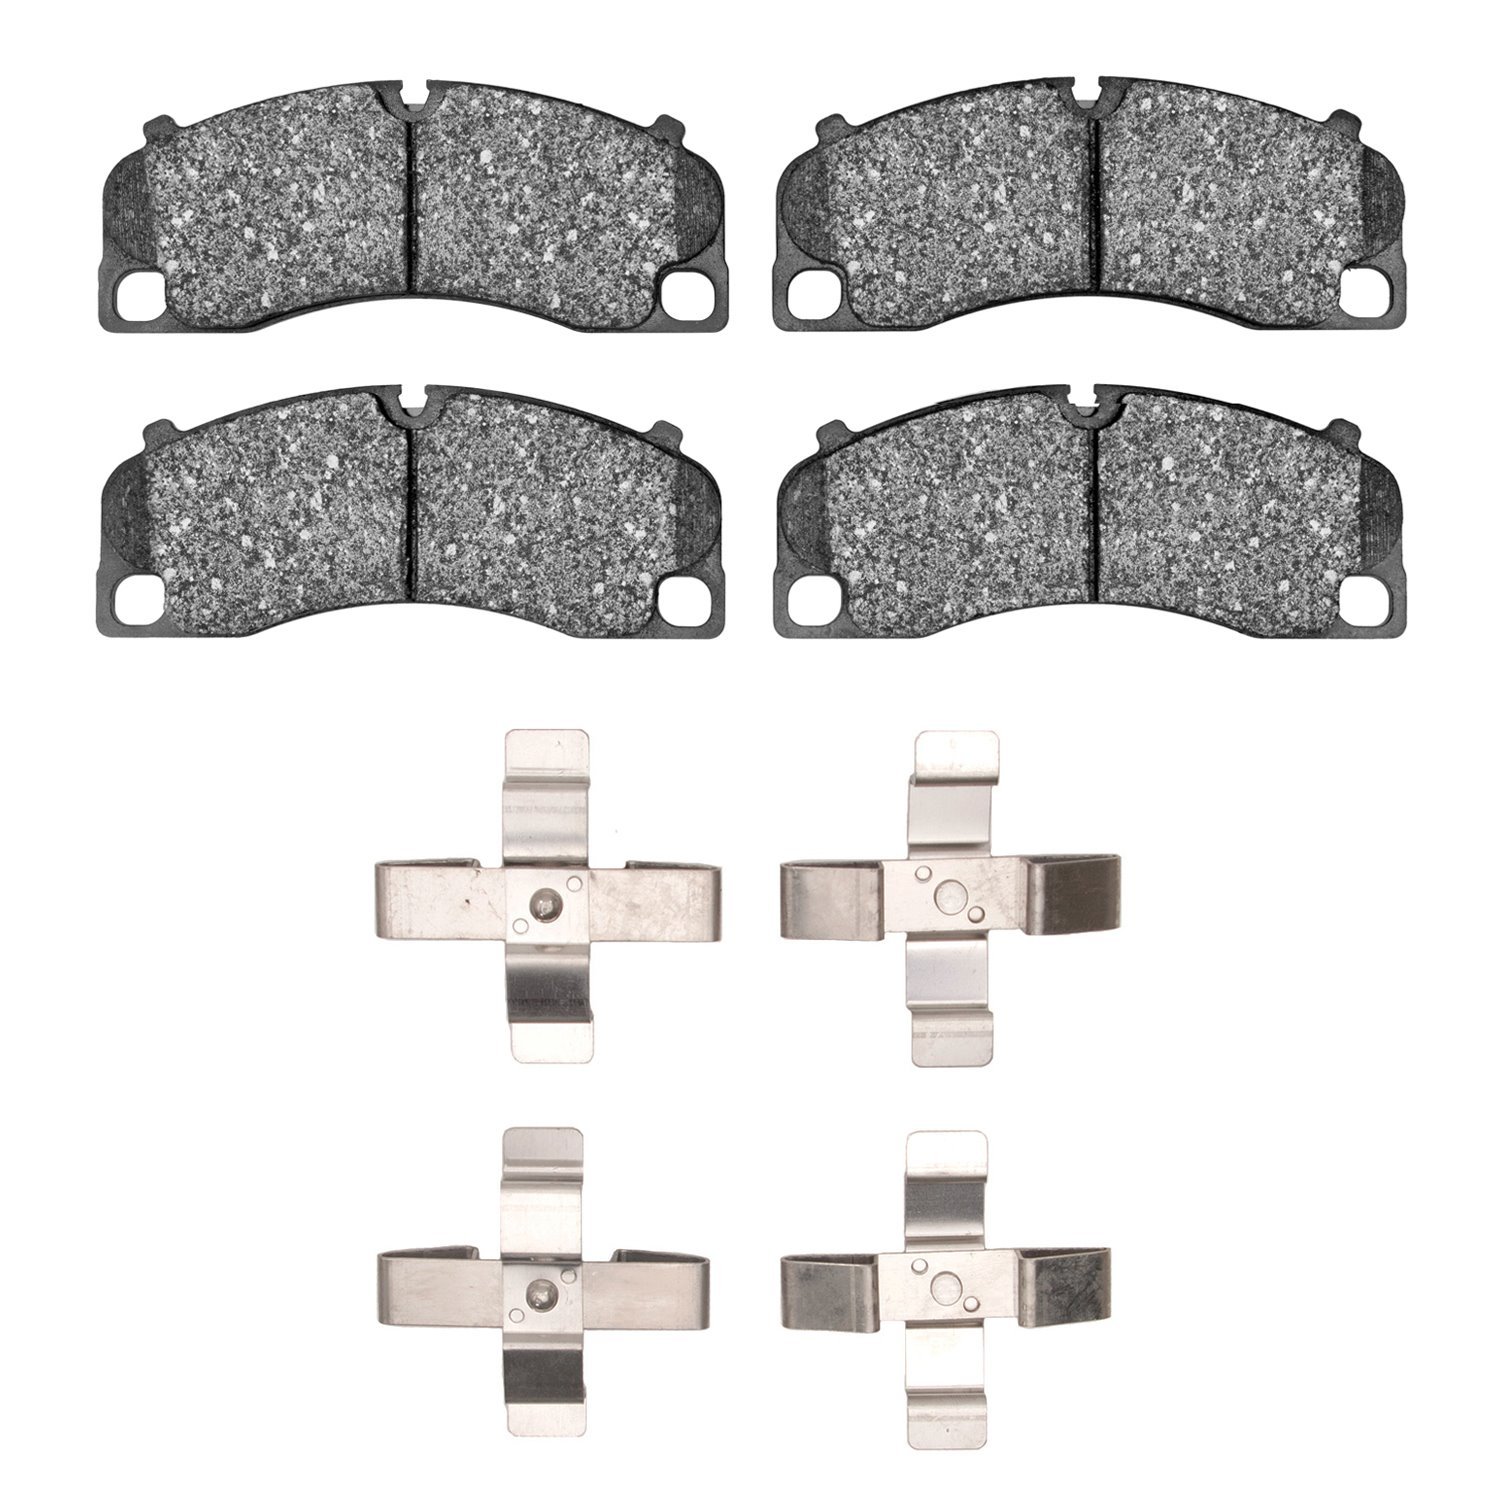 1551-1637-01 5000 Advanced Low-Metallic Brake Pads & Hardware Kit, Fits Select Porsche, Position: Front